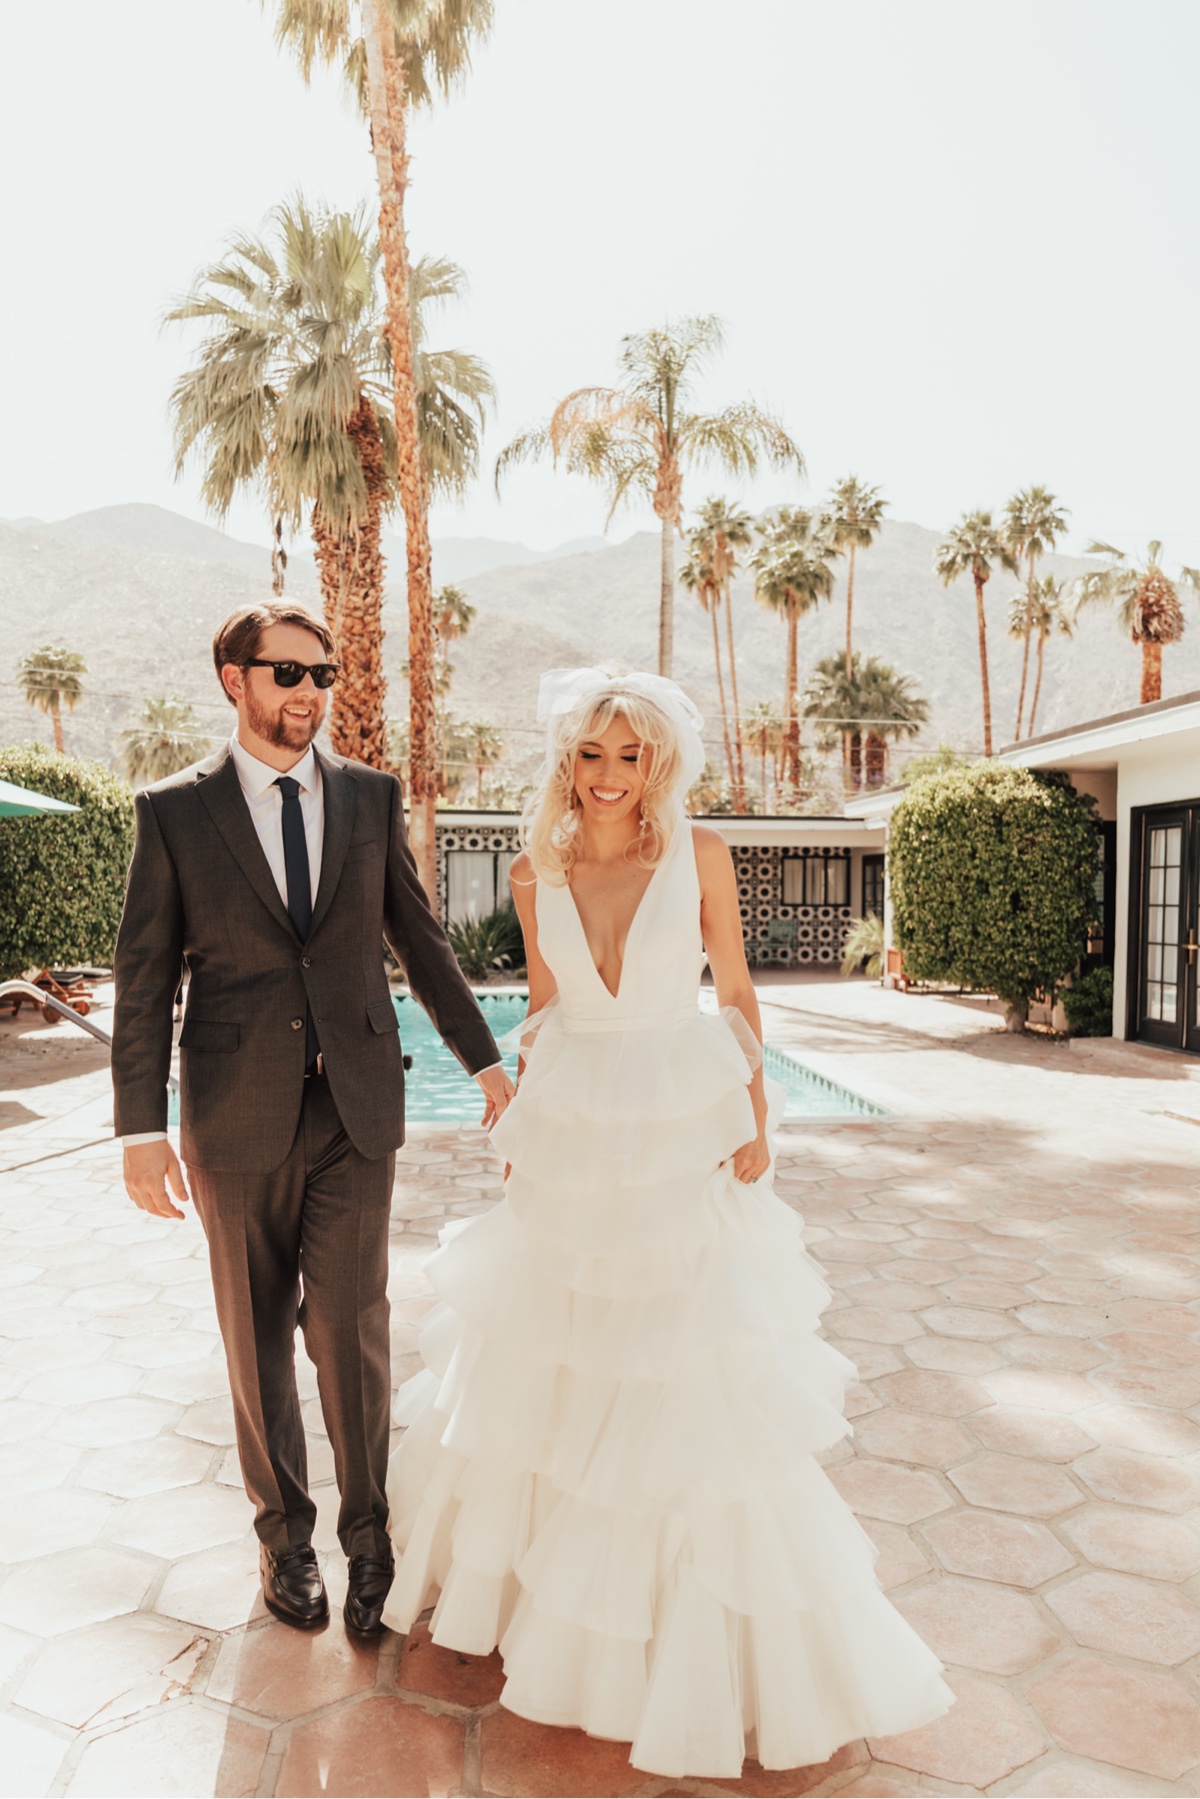 Villa Royale Palm Springs wedding